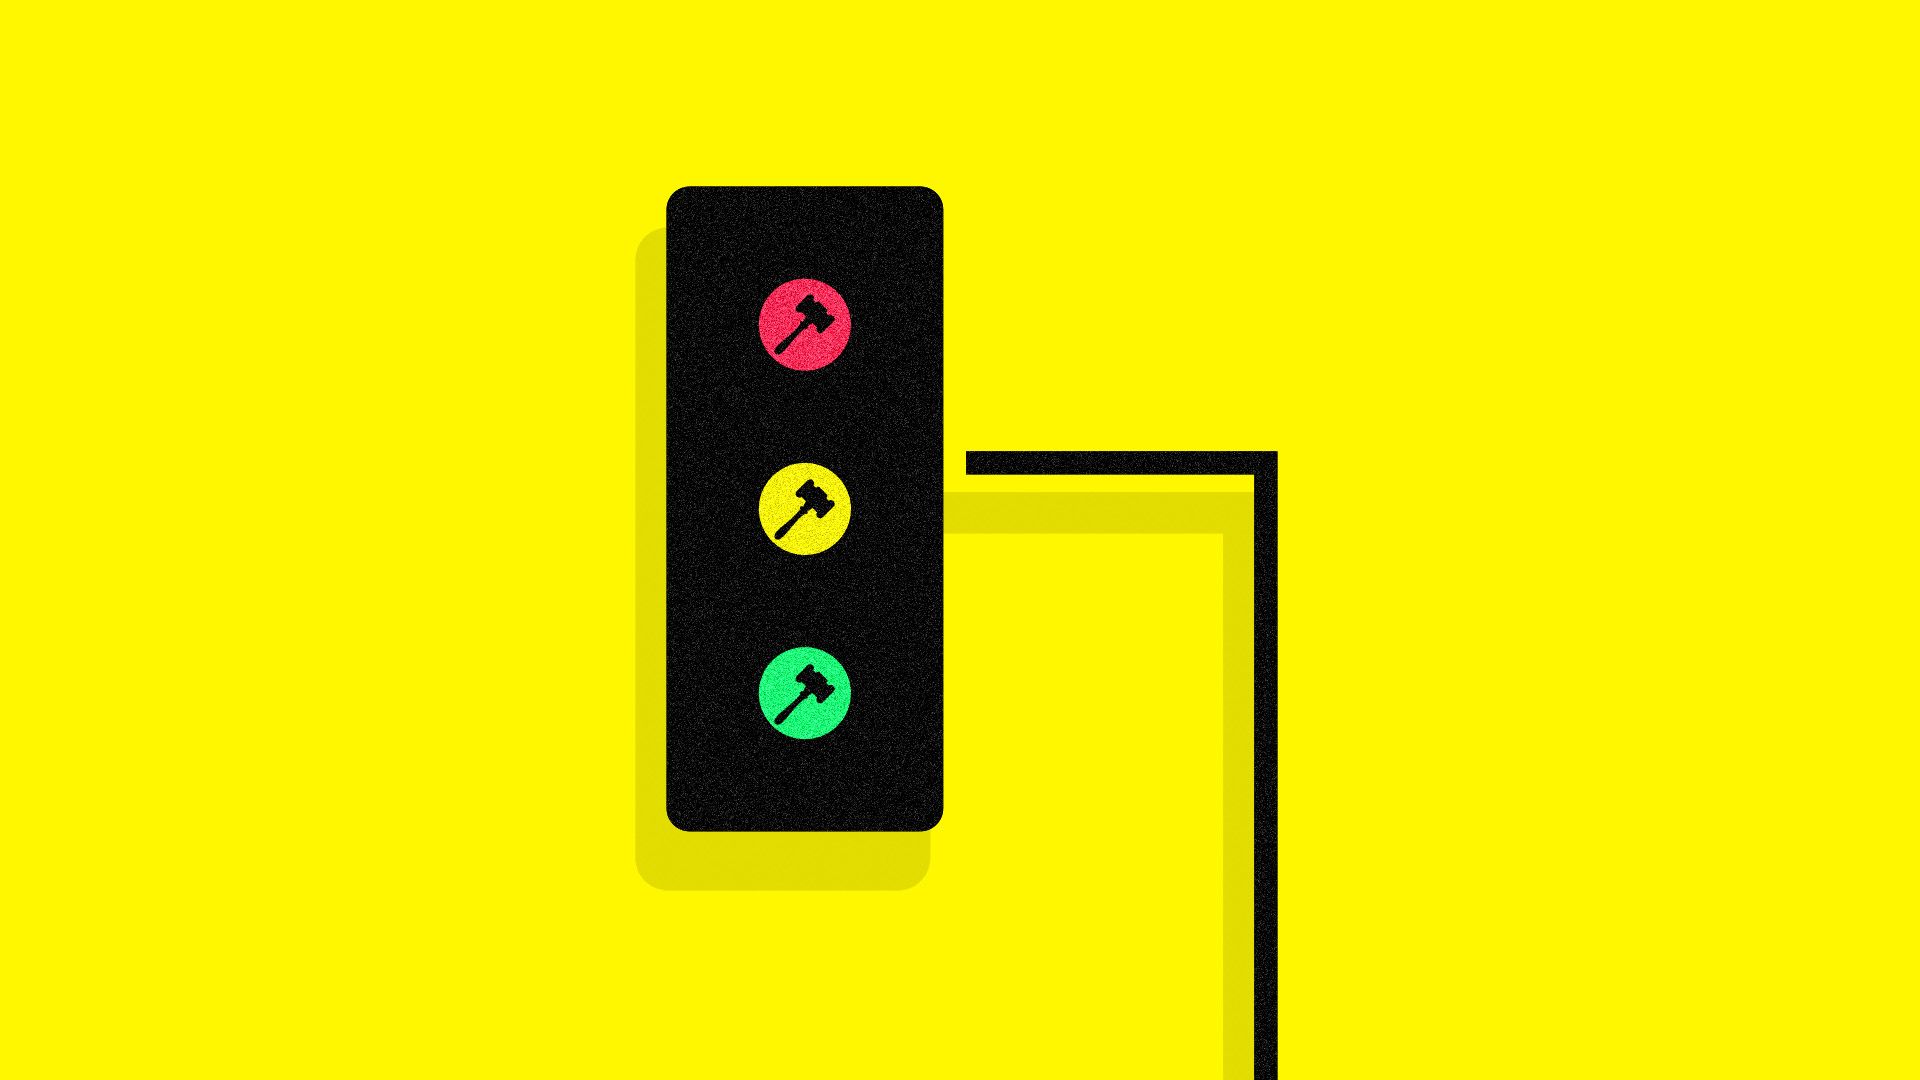 Illustration of traffic light with gavels in each light